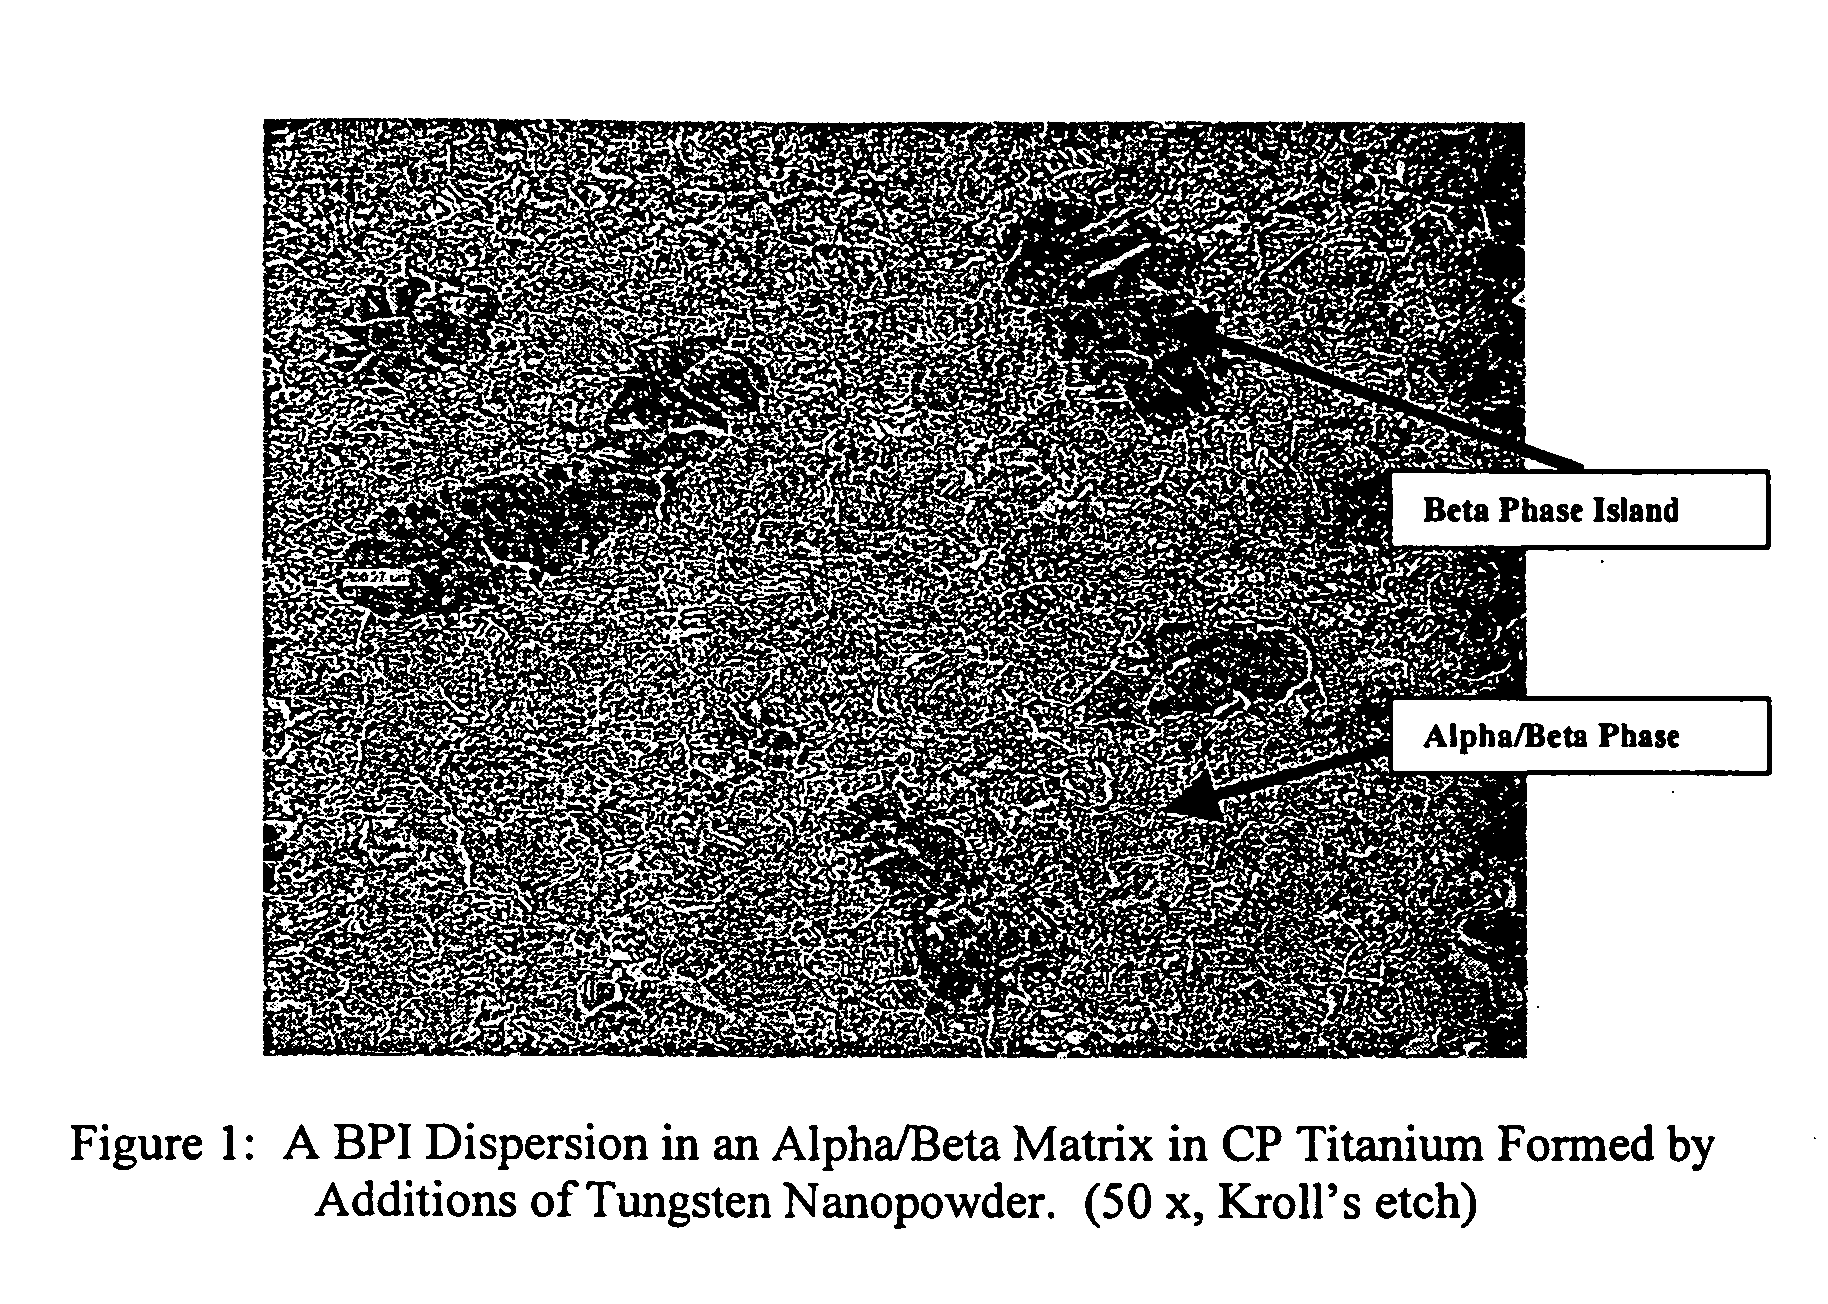 Titanium tungsten alloys produced by additions of tungsten nanopowder